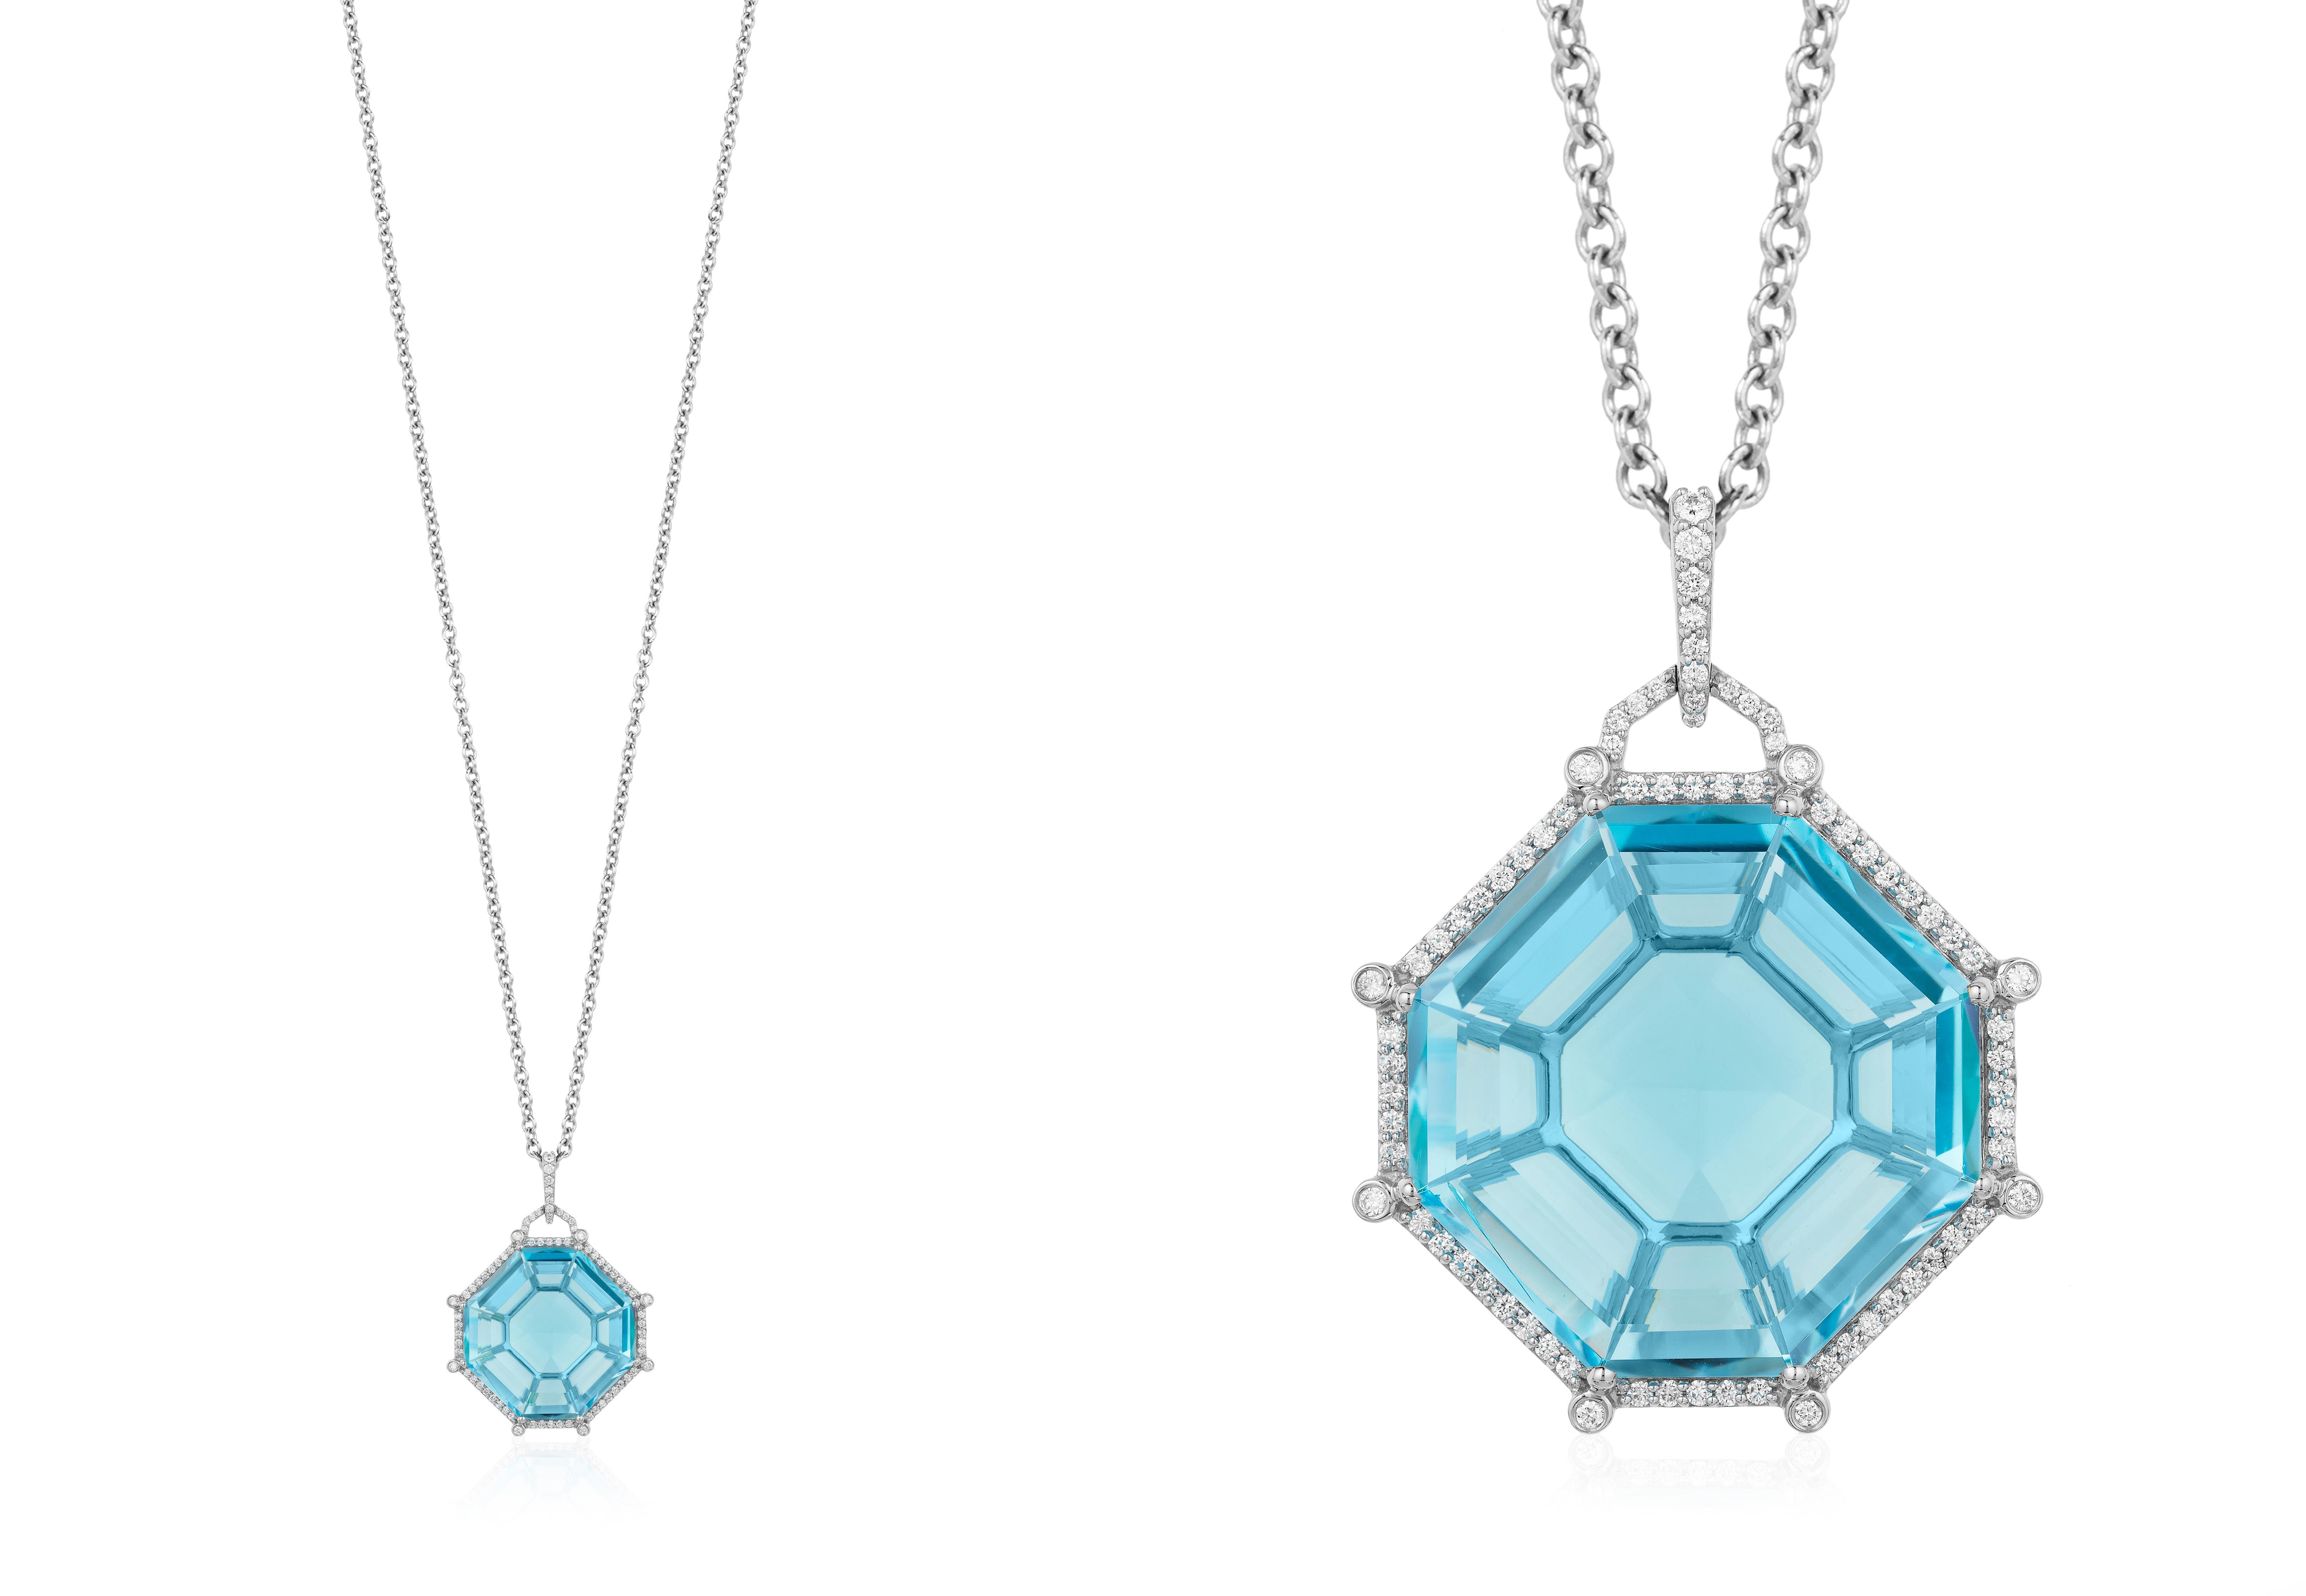 'Gossip' Blue Topaz Octagon Pendant  with Diamonds in 18K
Stone Size: 22.5 x 22.5 mm 
Diamonds: G-H / VS, Approx Wt: 0.46 Cts